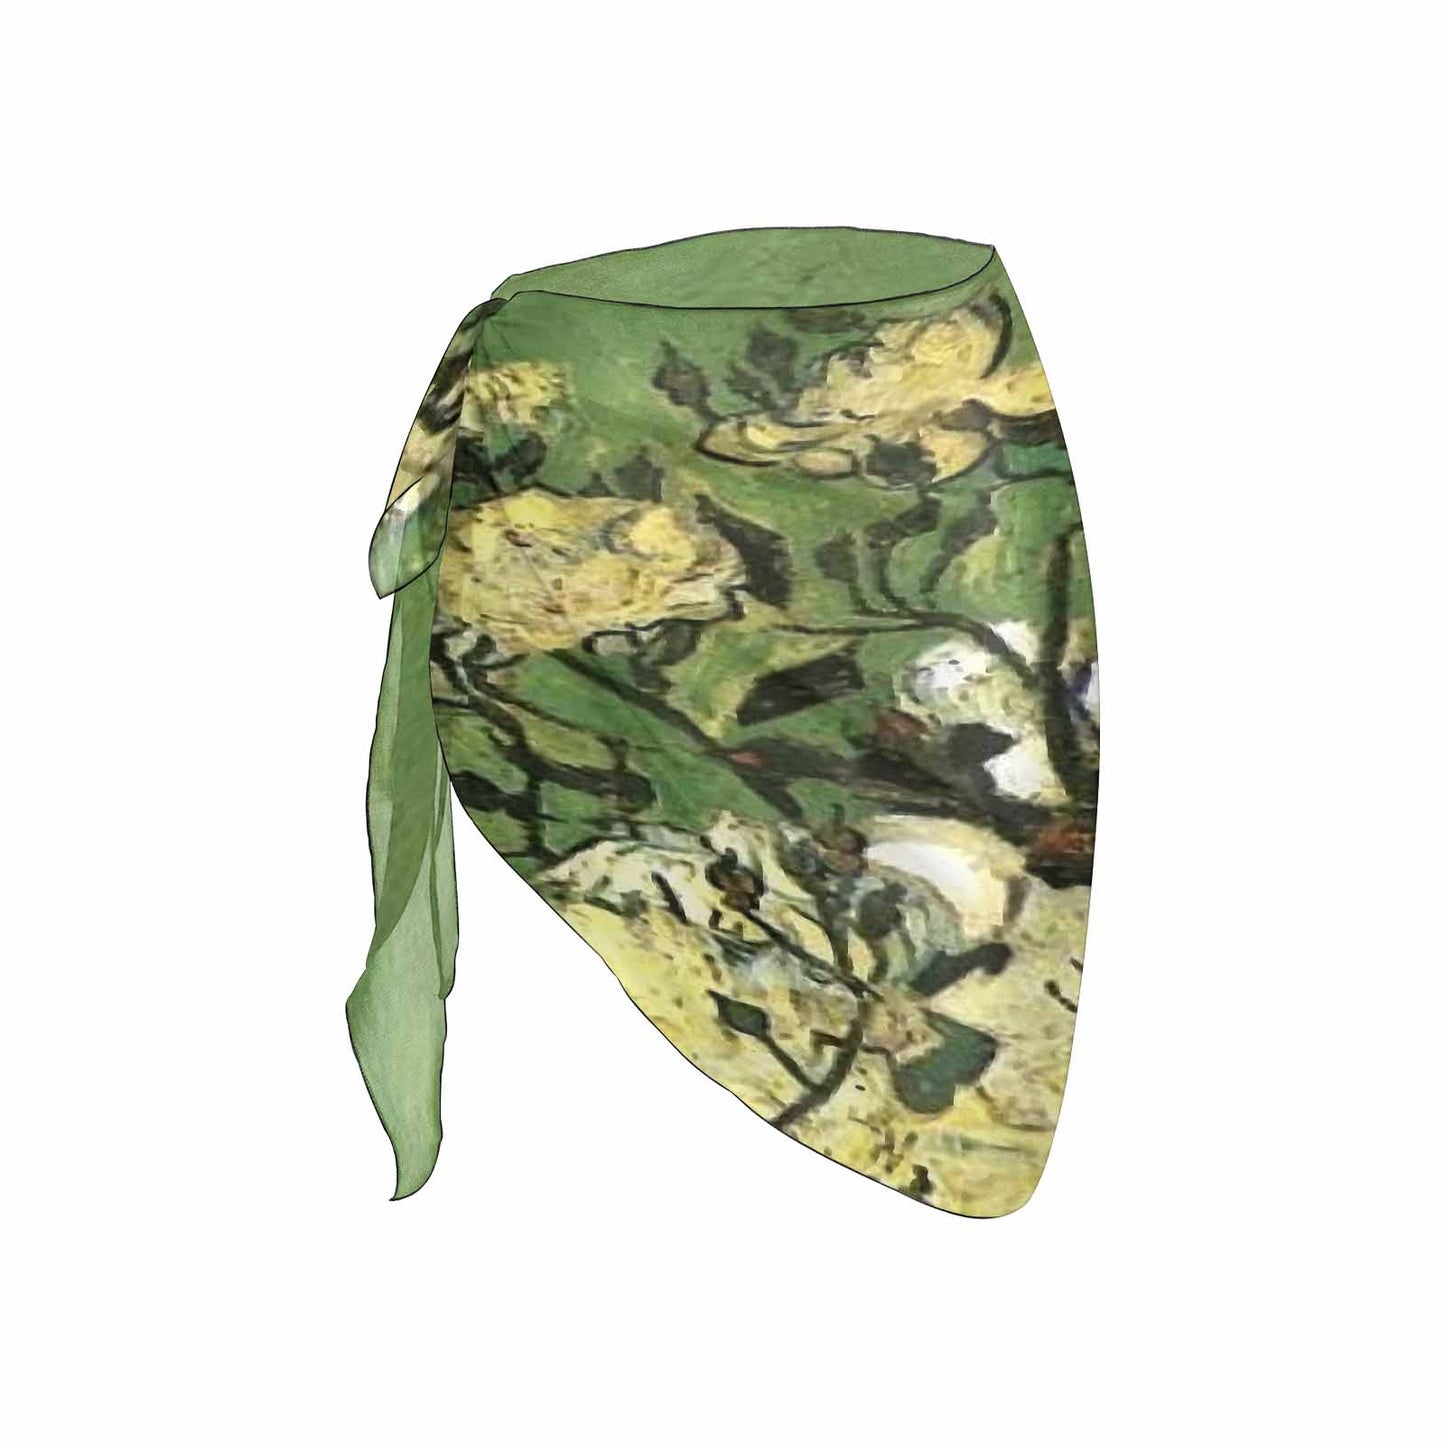 Vintage floral, beach sarong, beach coverup, swim wear, Design 55